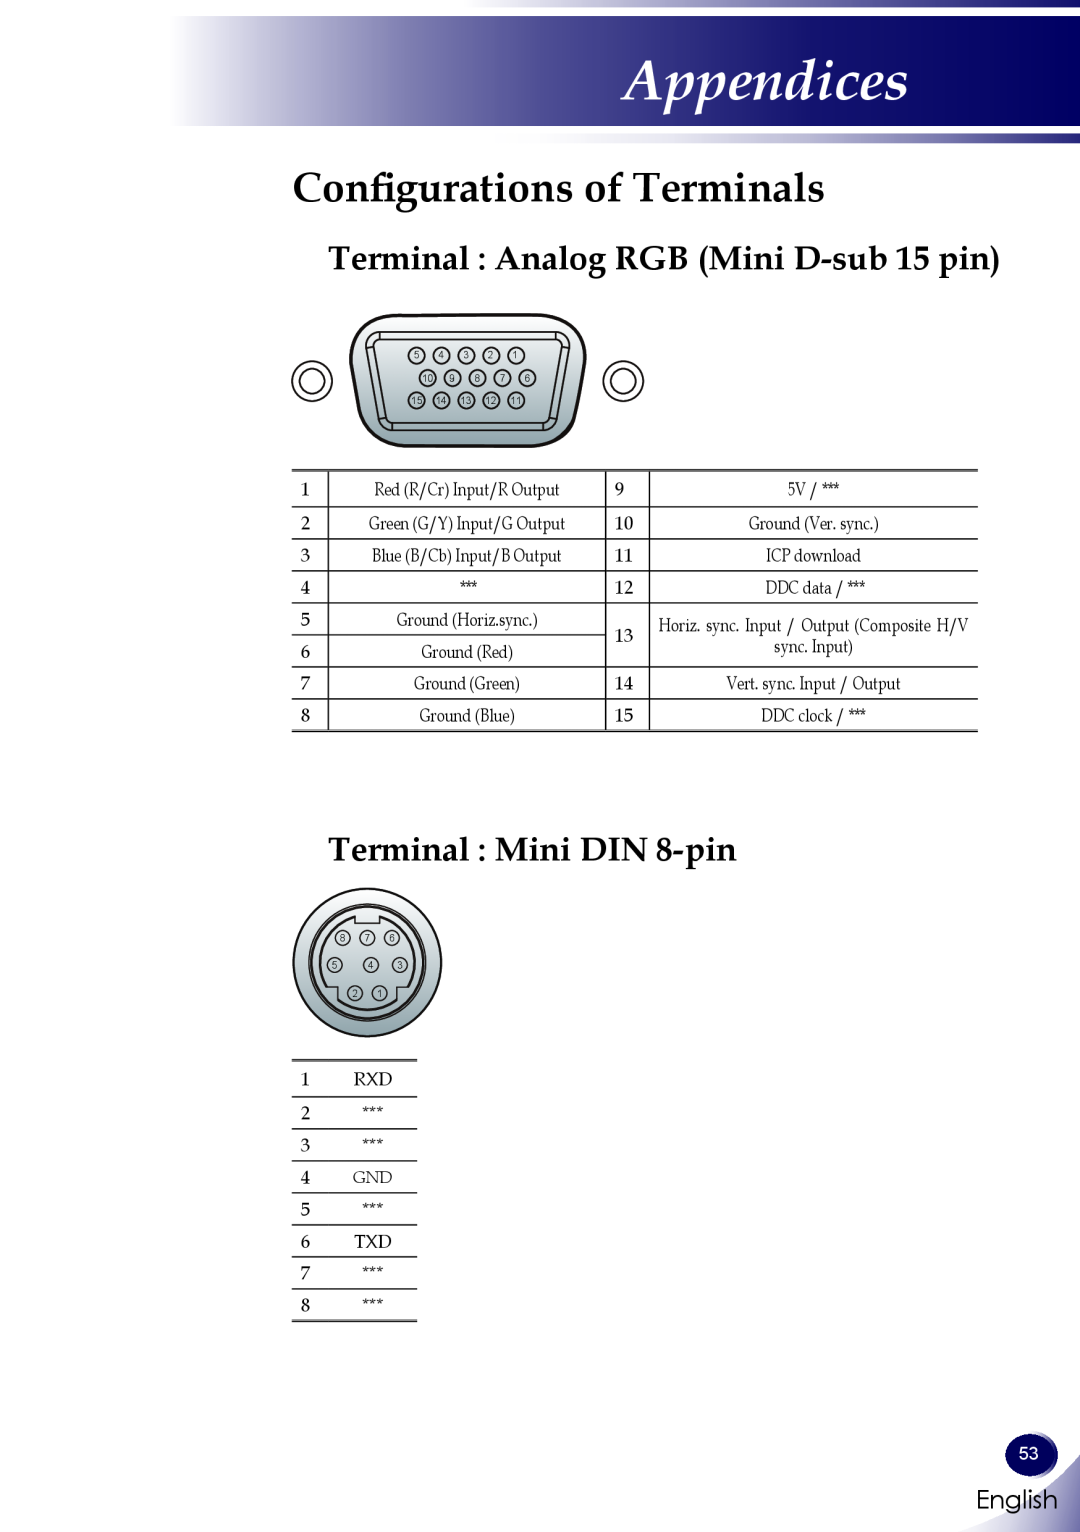 Sanyo PDG-DXL100 Configurations of Terminals, Terminal Analog RGB Mini D-sub 15 pin, Terminal Mini DIN 8-pin, Appendices 